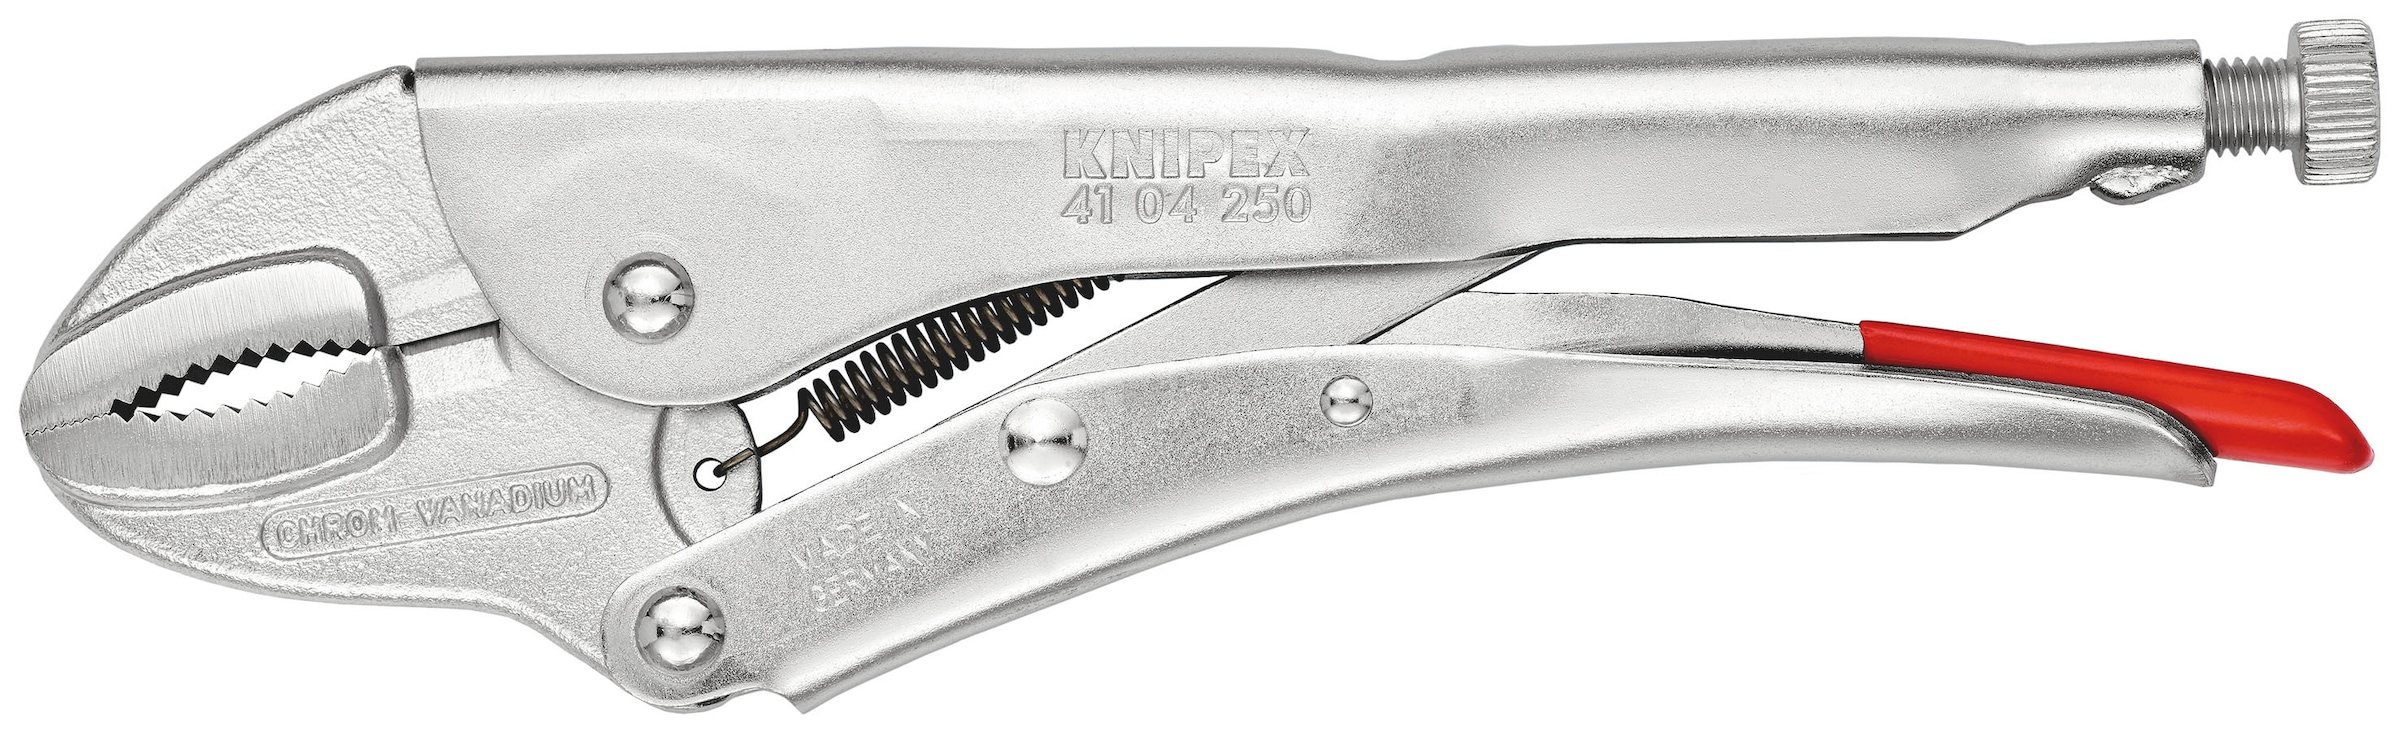 Knipex Gripzange "41 04 250 EAN", (1 tlg.), verzinkt 250 mm